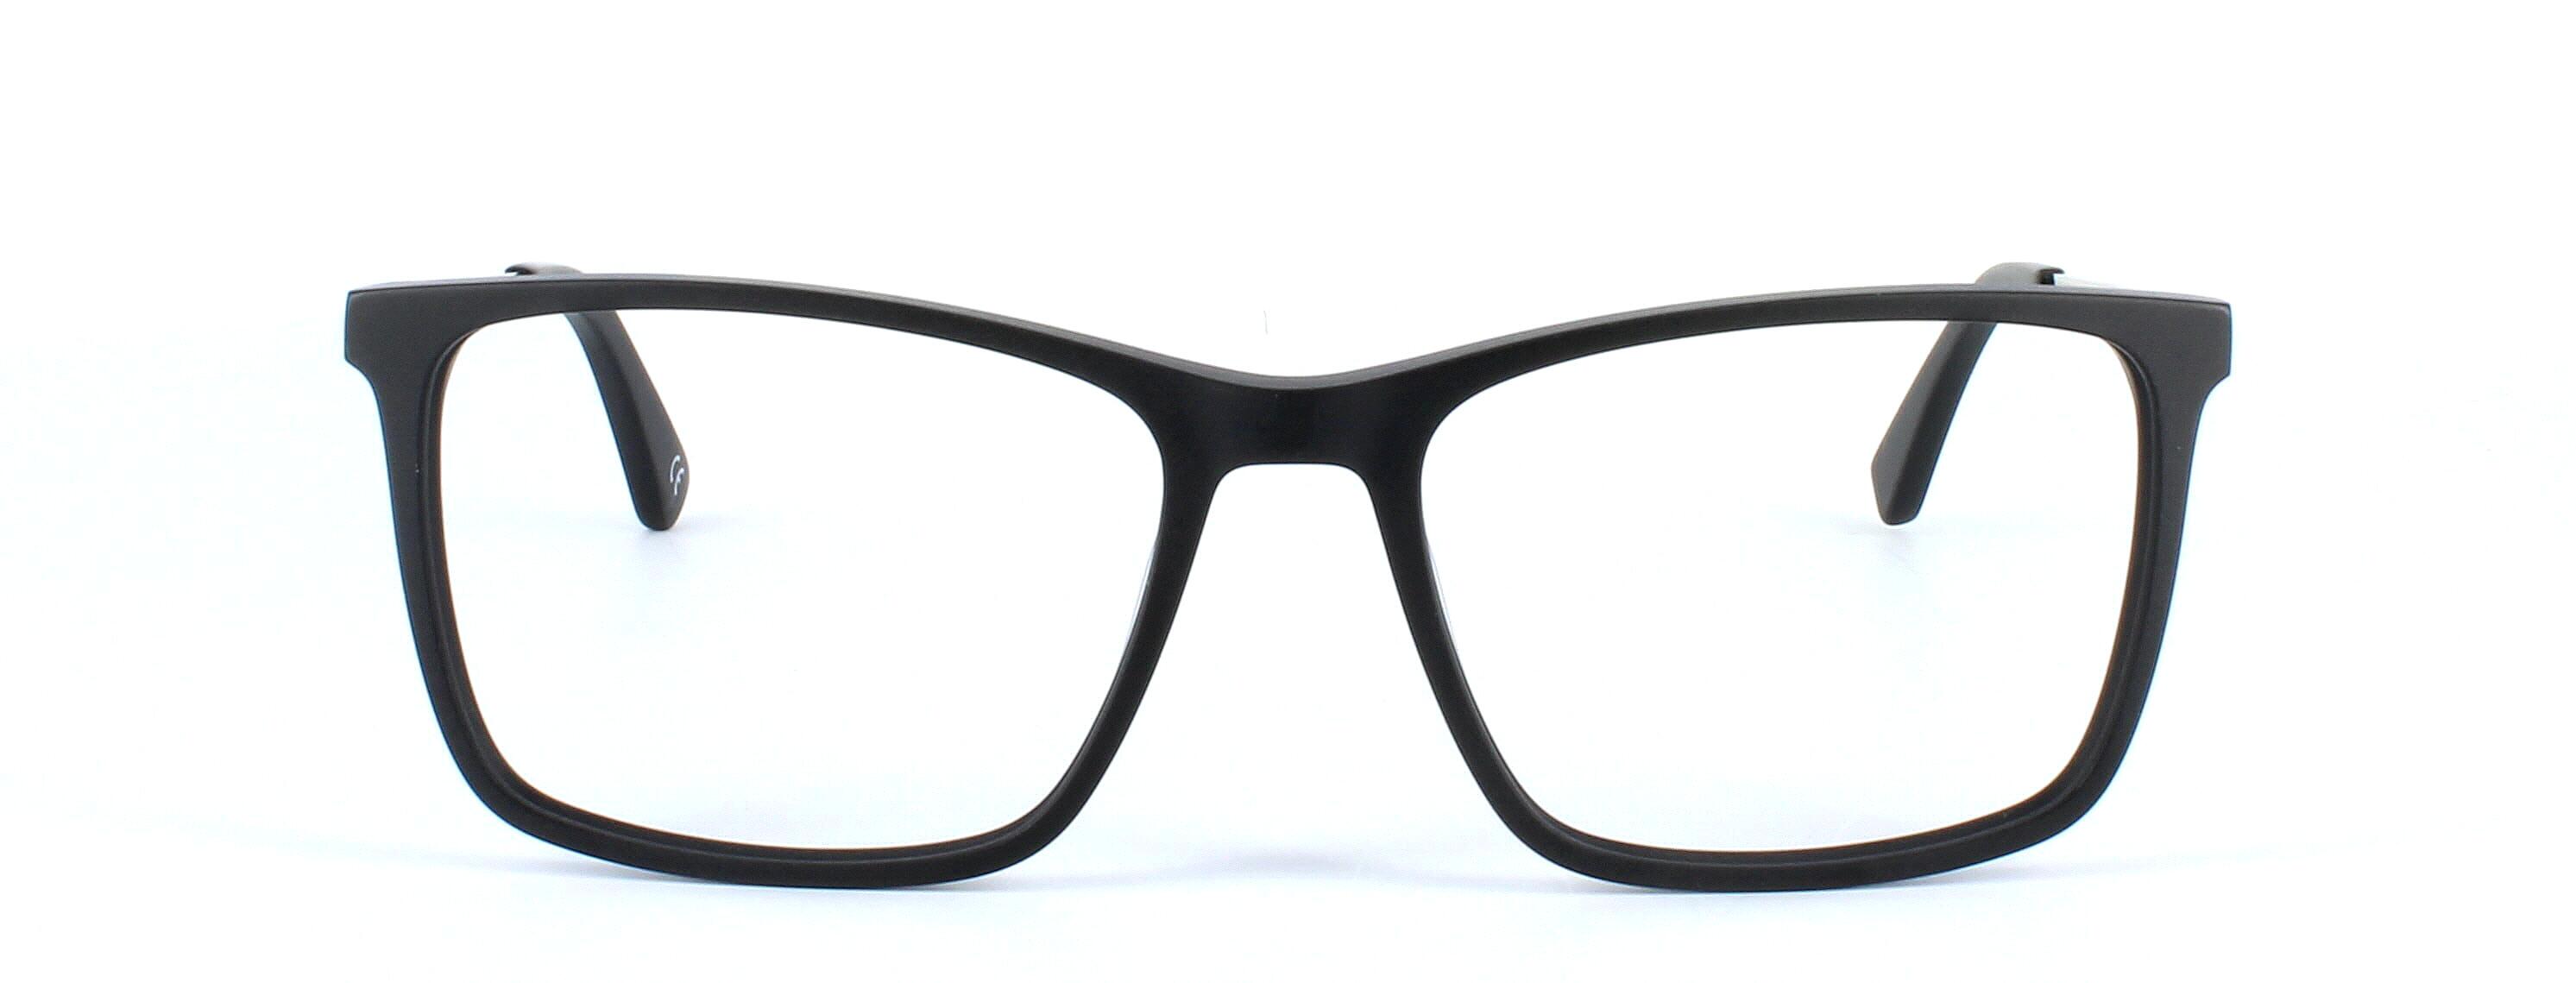 Farleigh - men's acetate glasses frame in matt black - image view 5